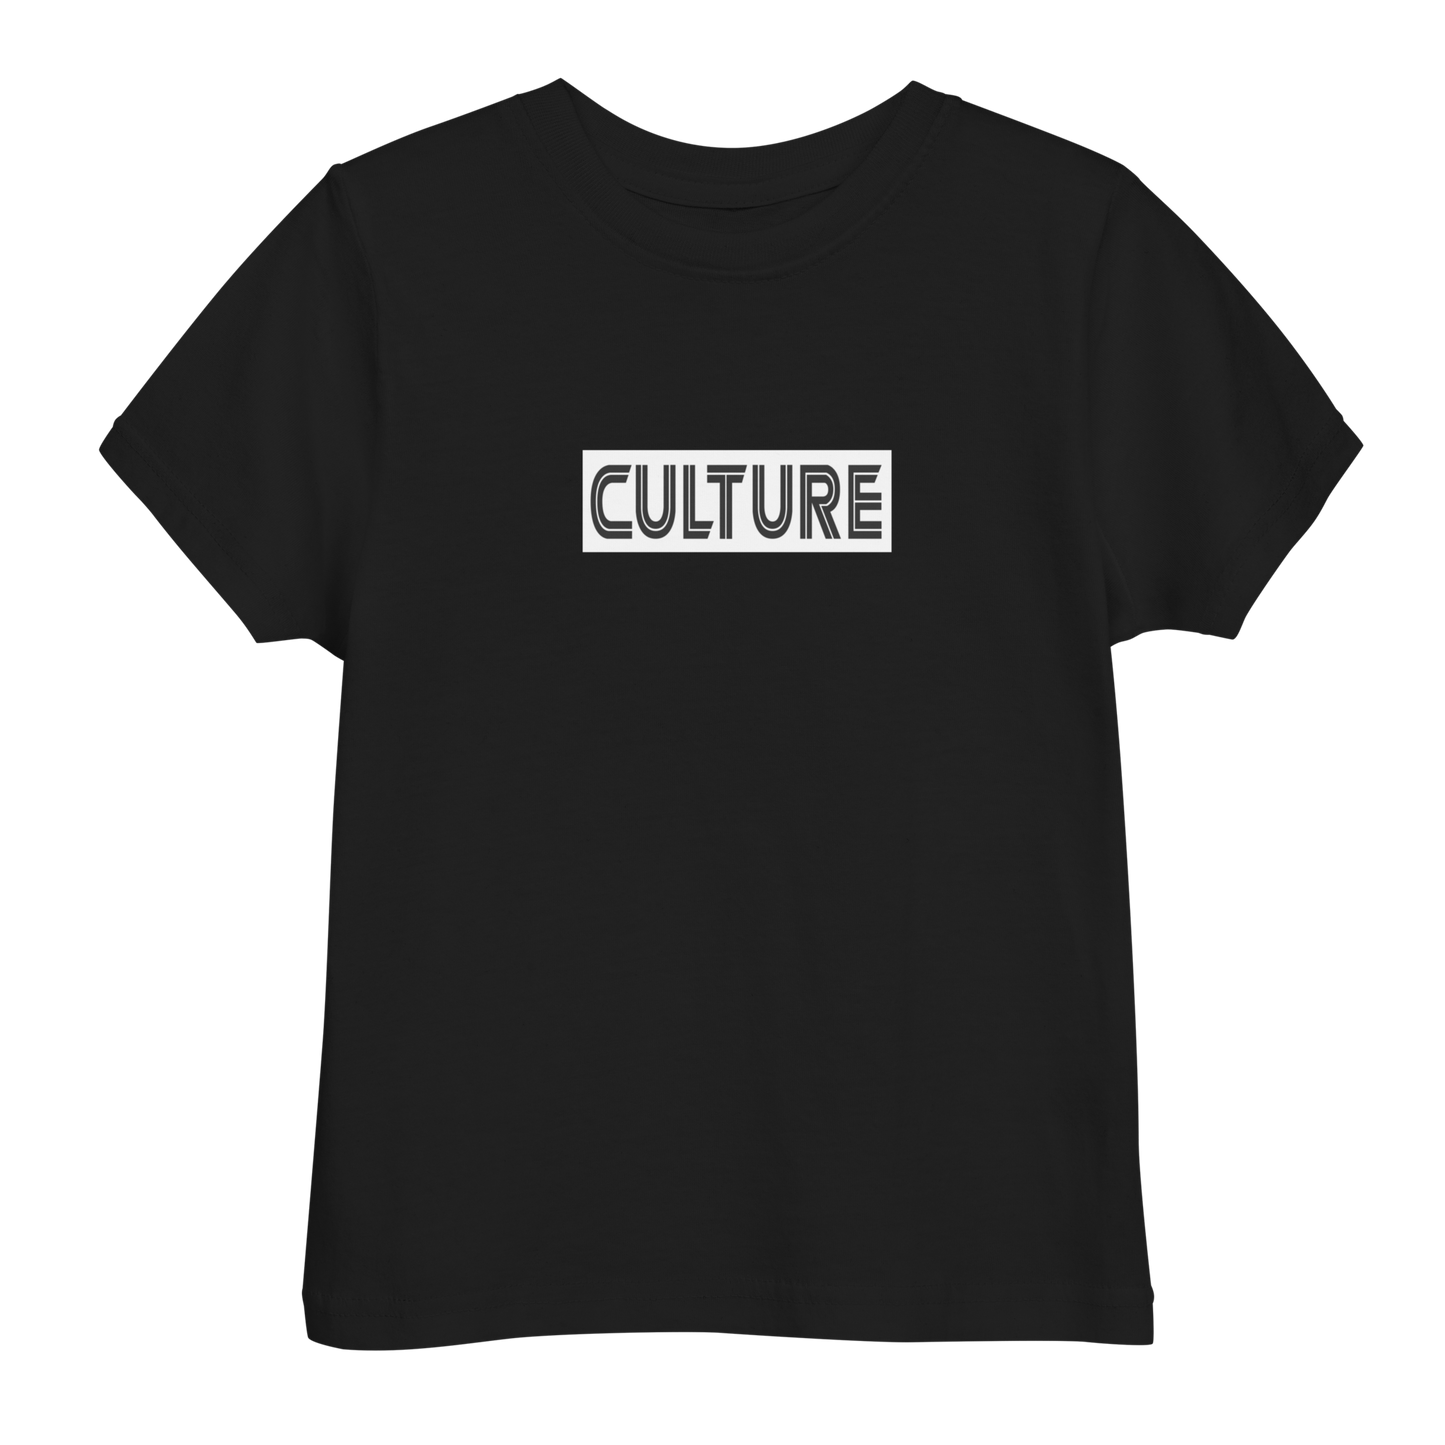 Culture Toddler jersey t-shirt